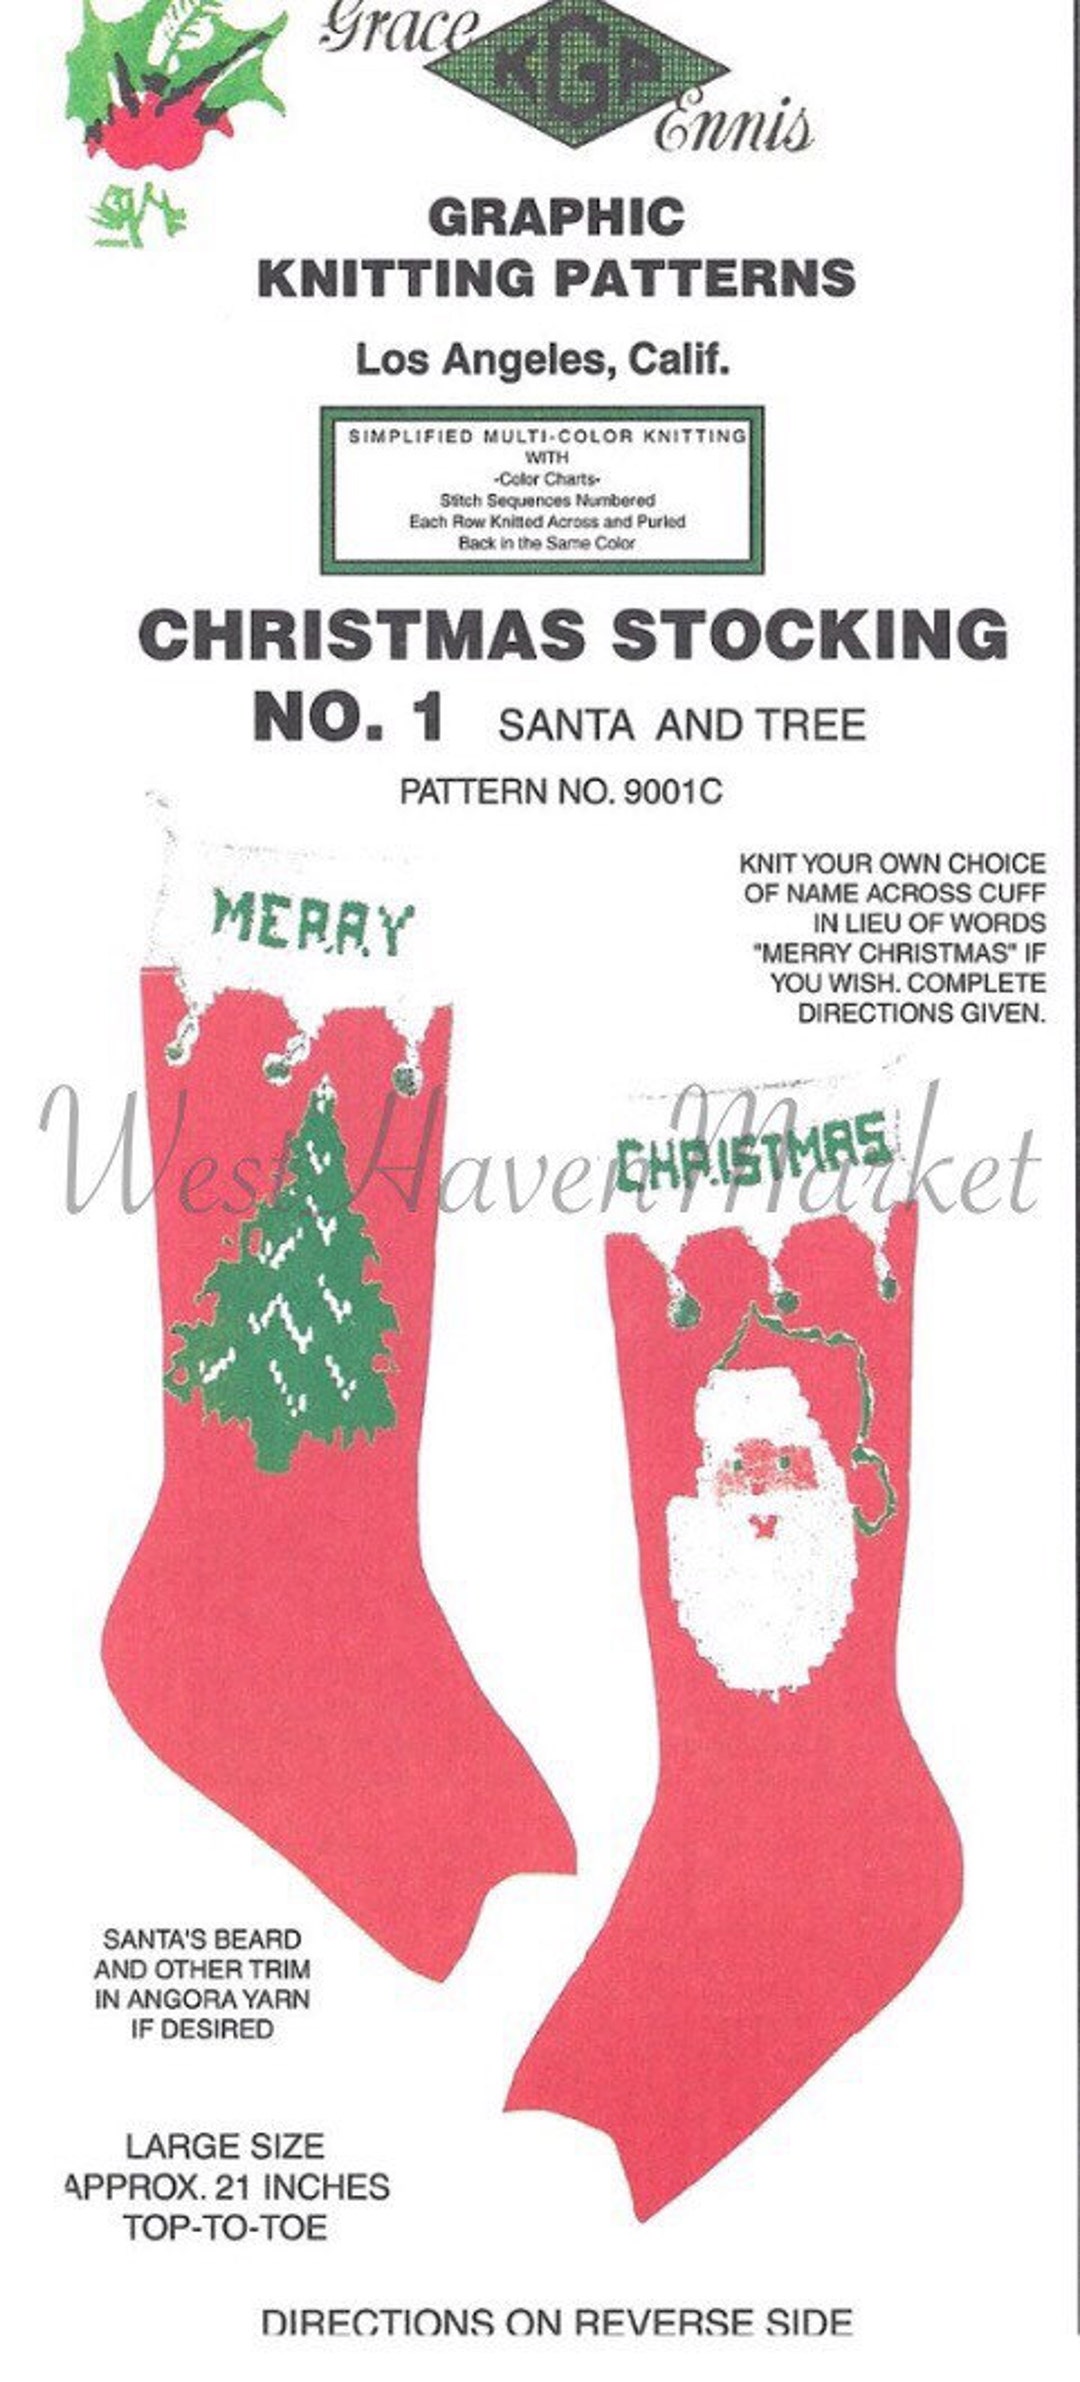 Ravelry: Tshirt yarn Christmas stocking pattern by Irina Sheina